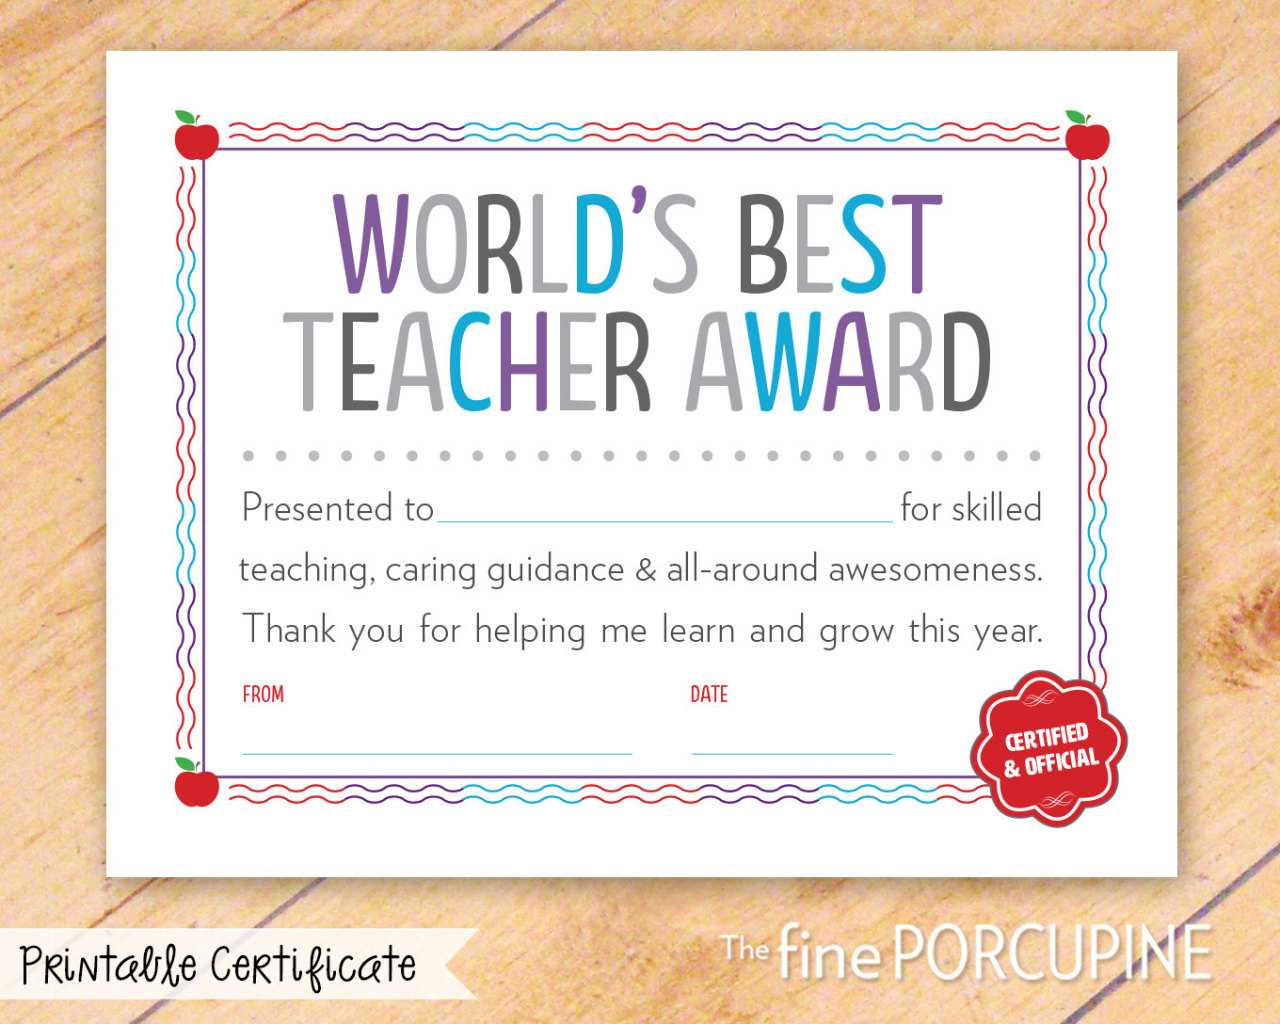 The Fine Porcupine — World's Best Teacher Award, Printable Pertaining To Best Teacher Certificate Templates Free